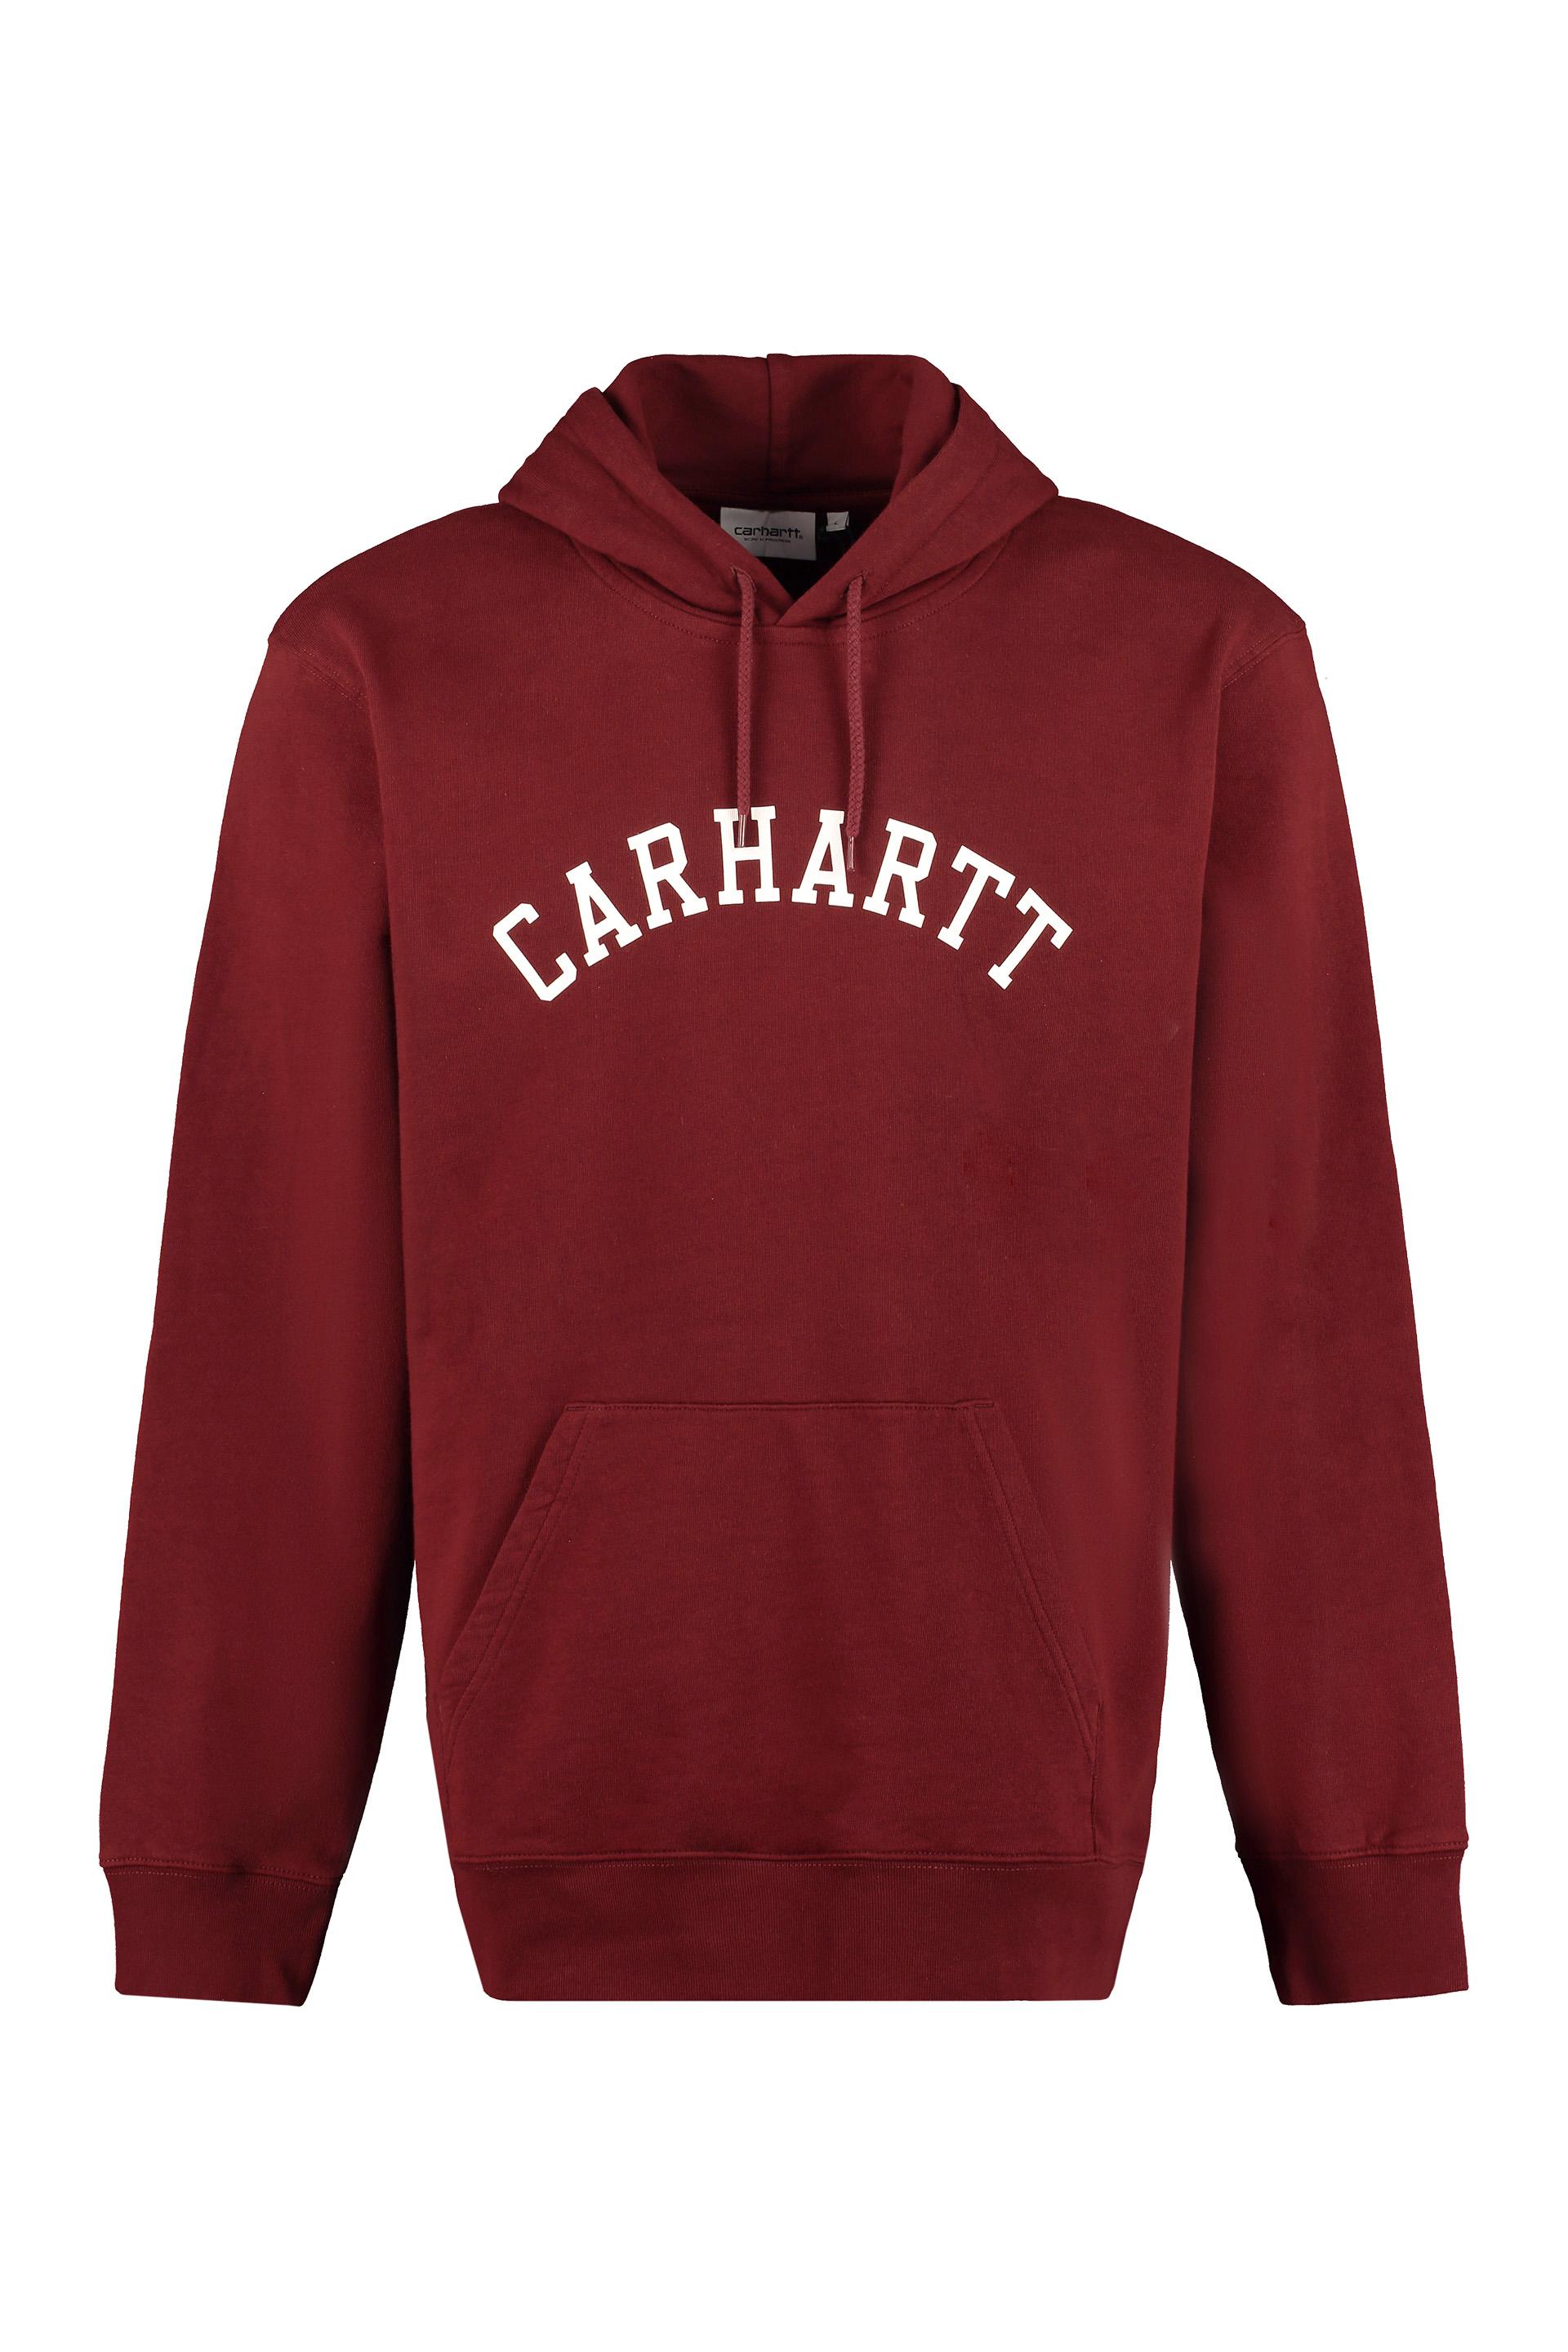 Carhartt Cotton Hoodie in Burgundy (Red) for Men - Lyst